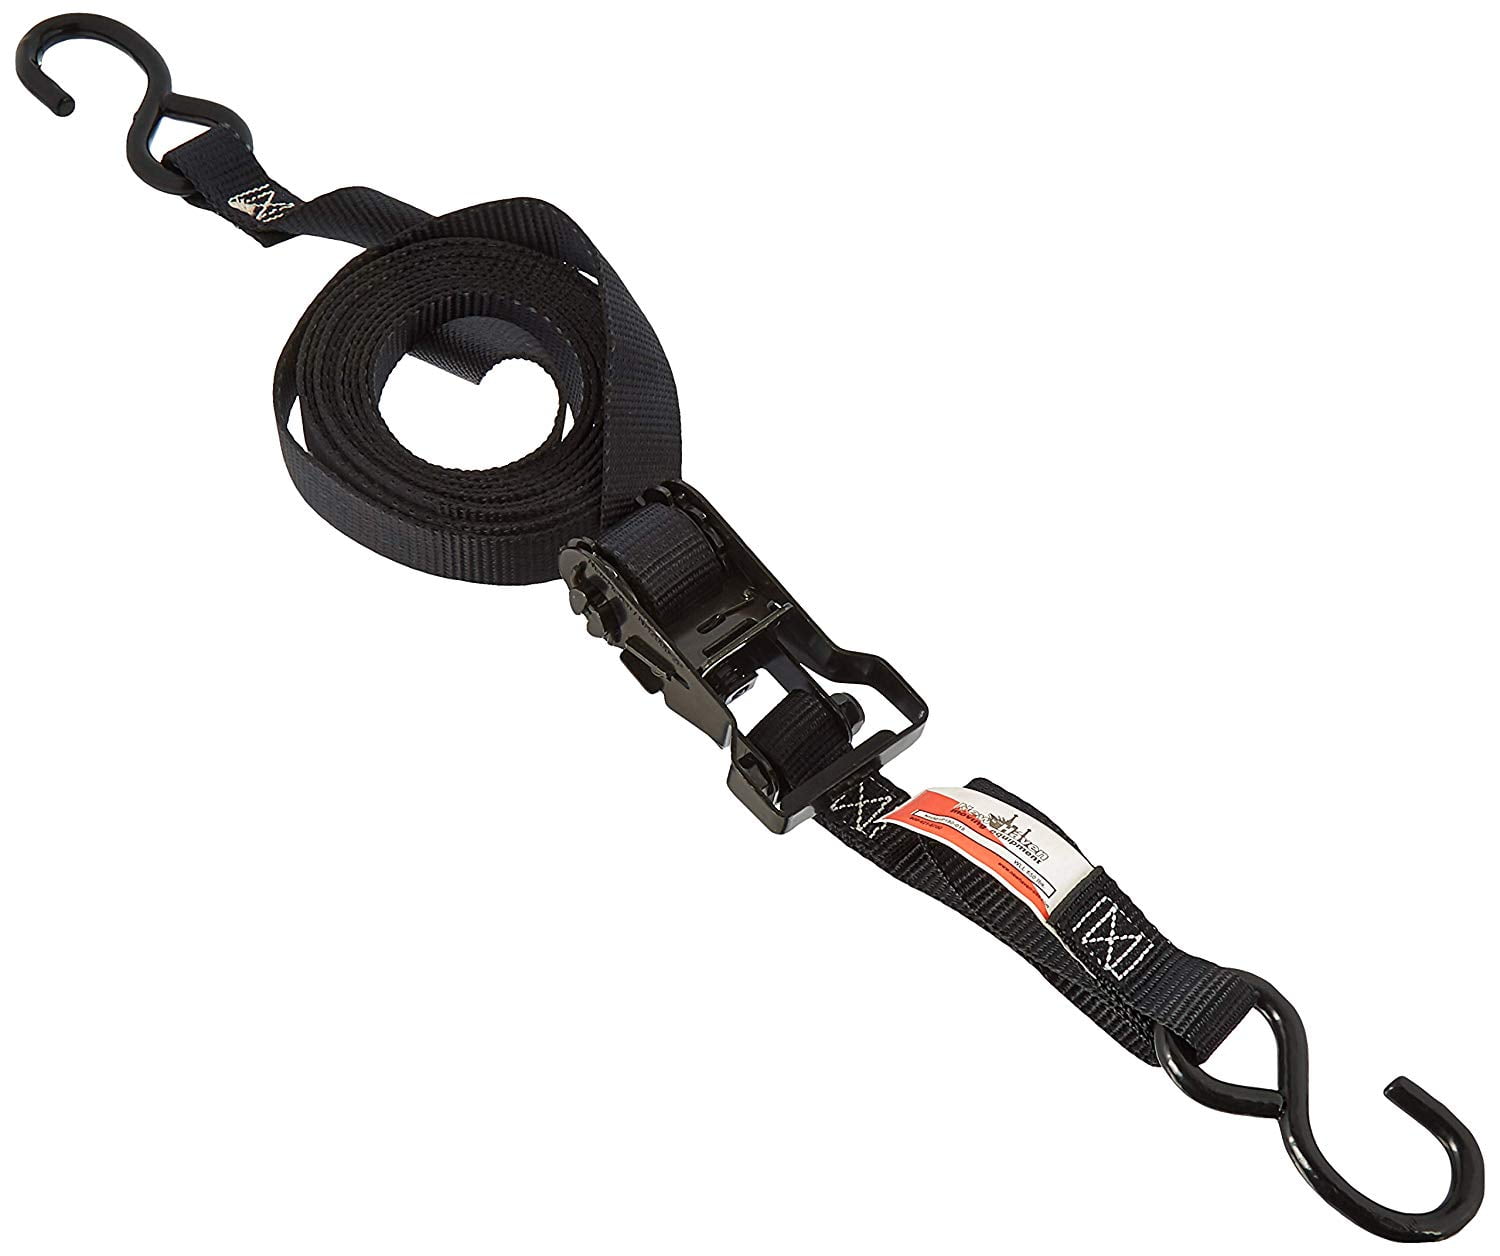 20pc bungee cord Ratchet buckle tie down set 1" x6' 1"x15' Heavy duty NEW 